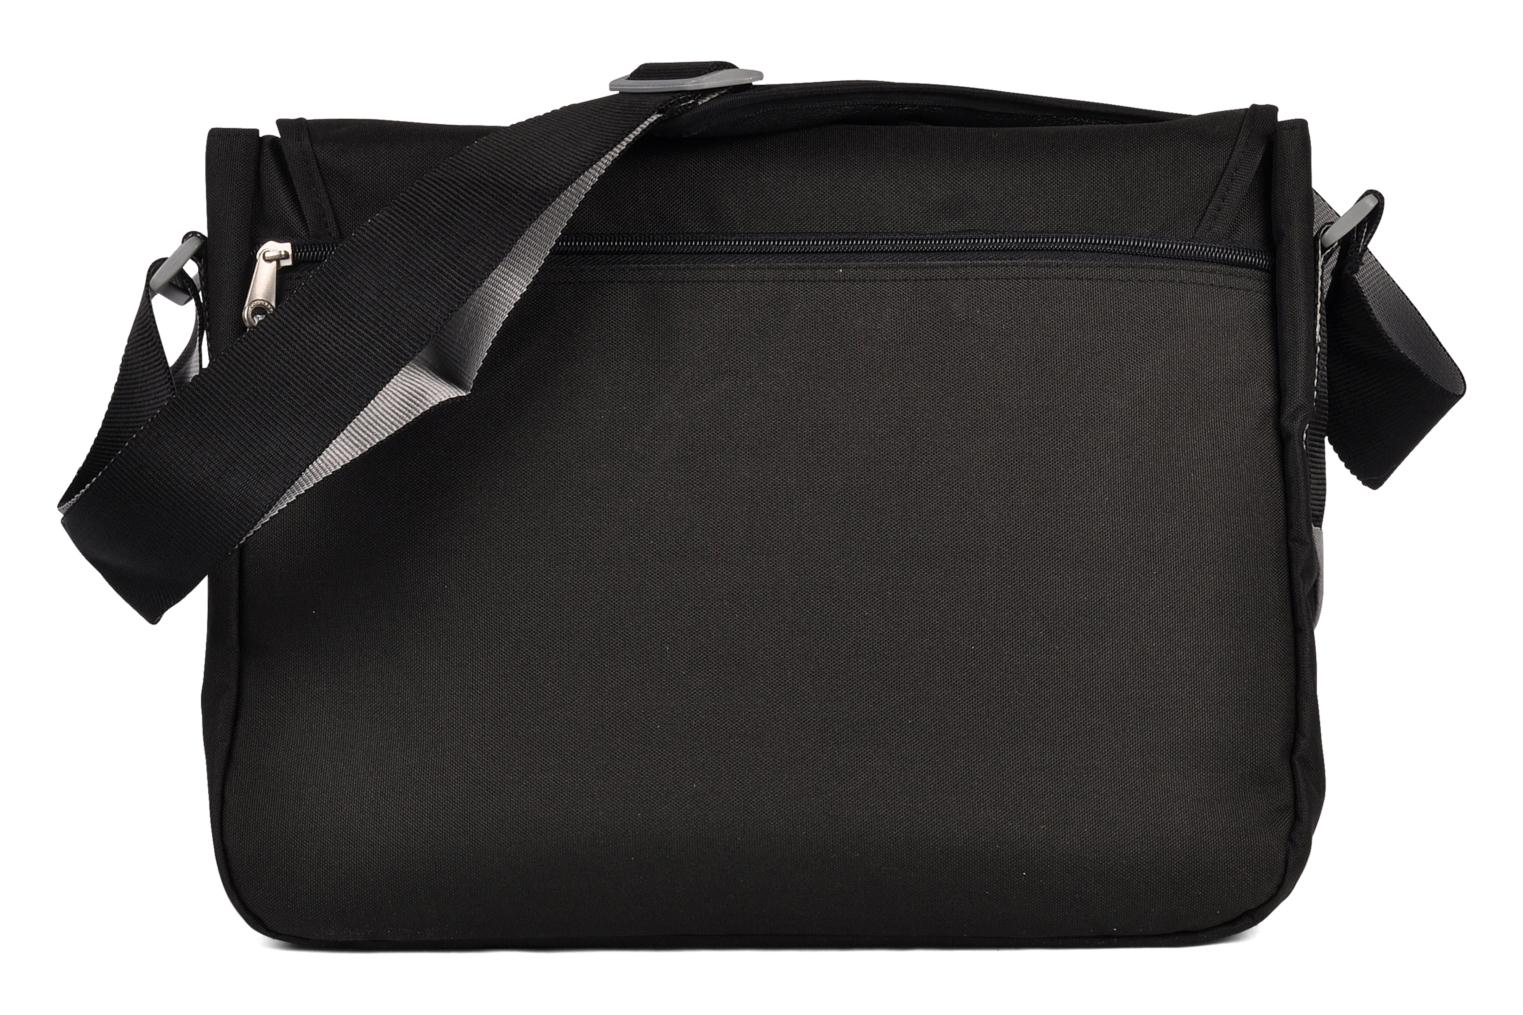 Converse Messenger Bag Laptop cases in Black at Sarenza.co.uk (50921)